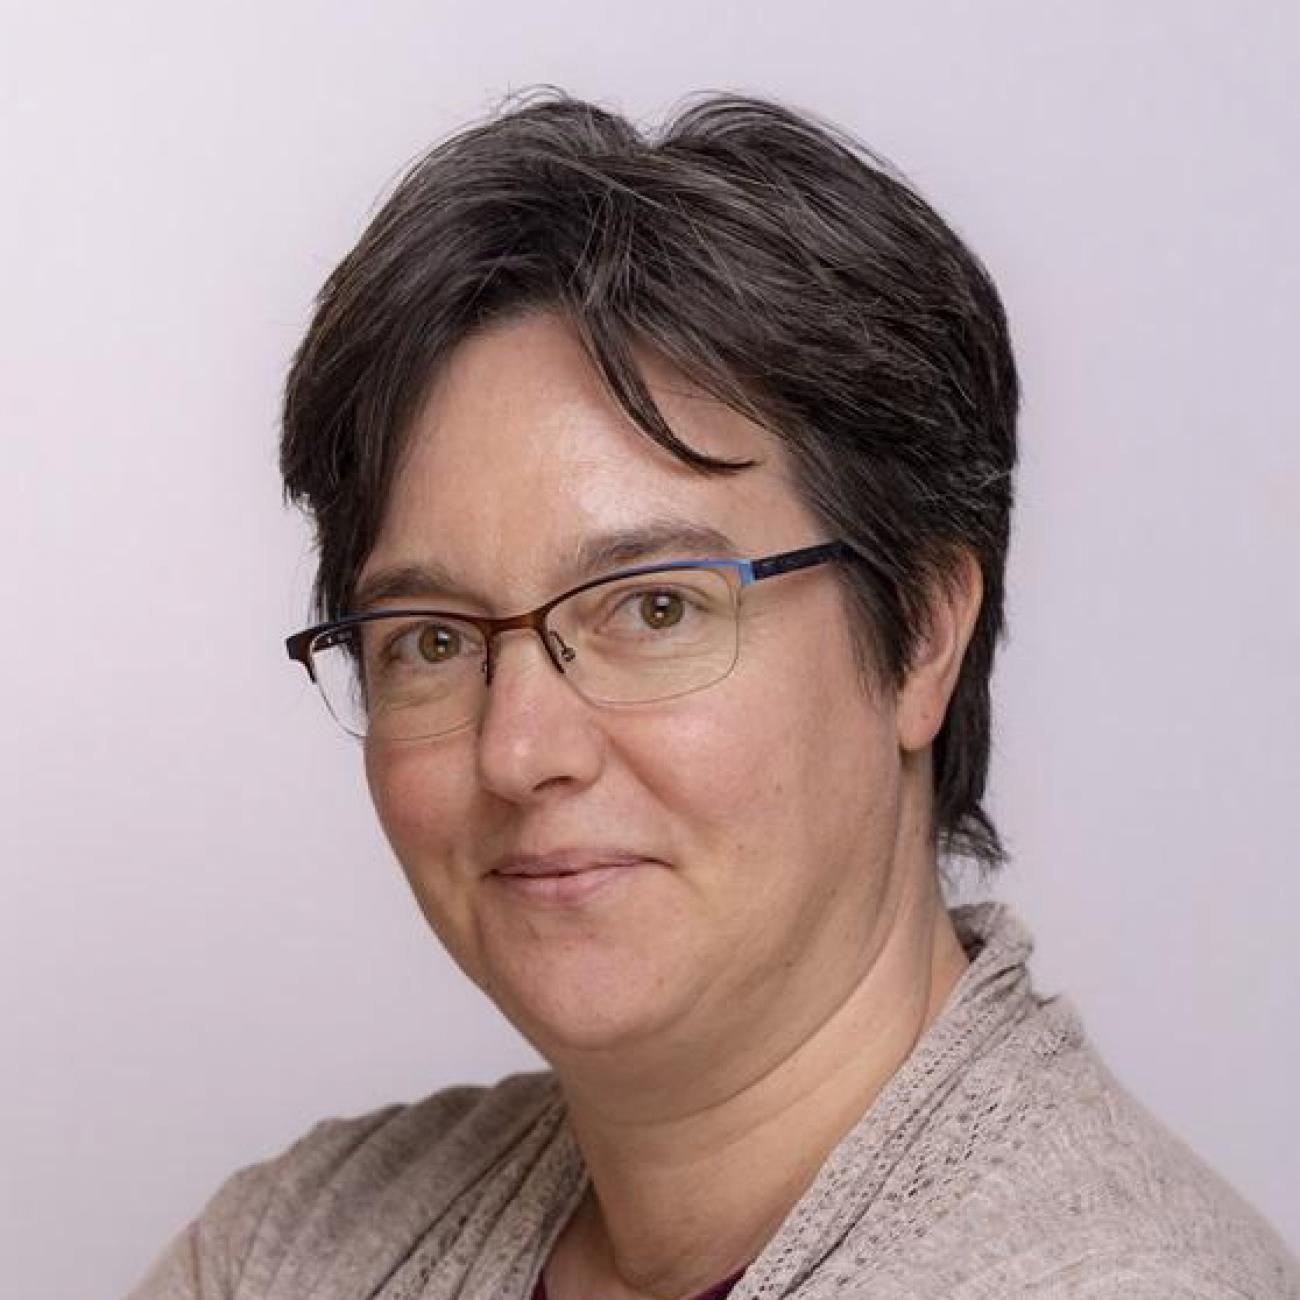 Professor Katrin Deinhardt